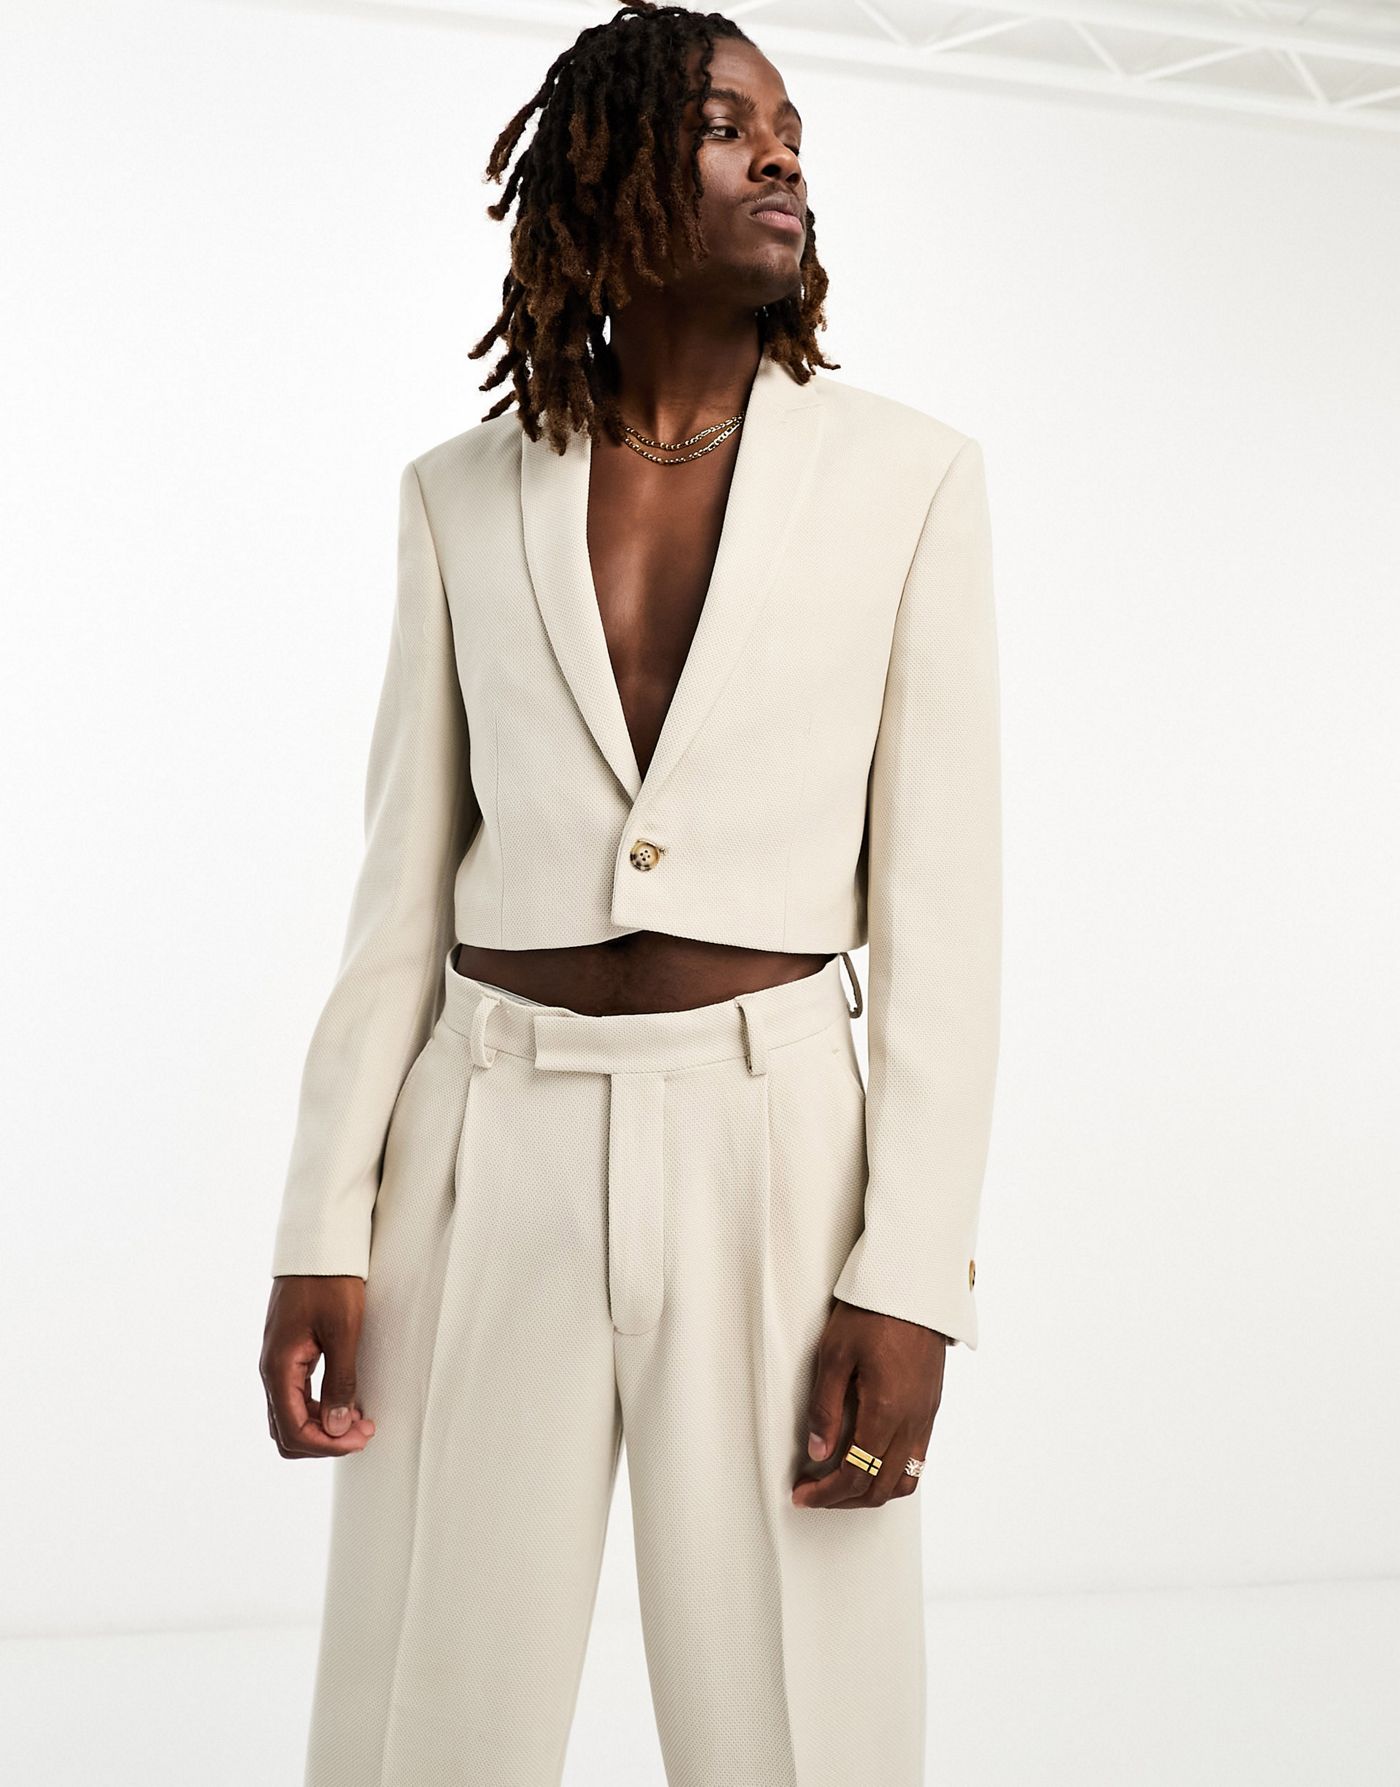 ASOS DESIGN slim super cropped suit jacket in beige textured jersey